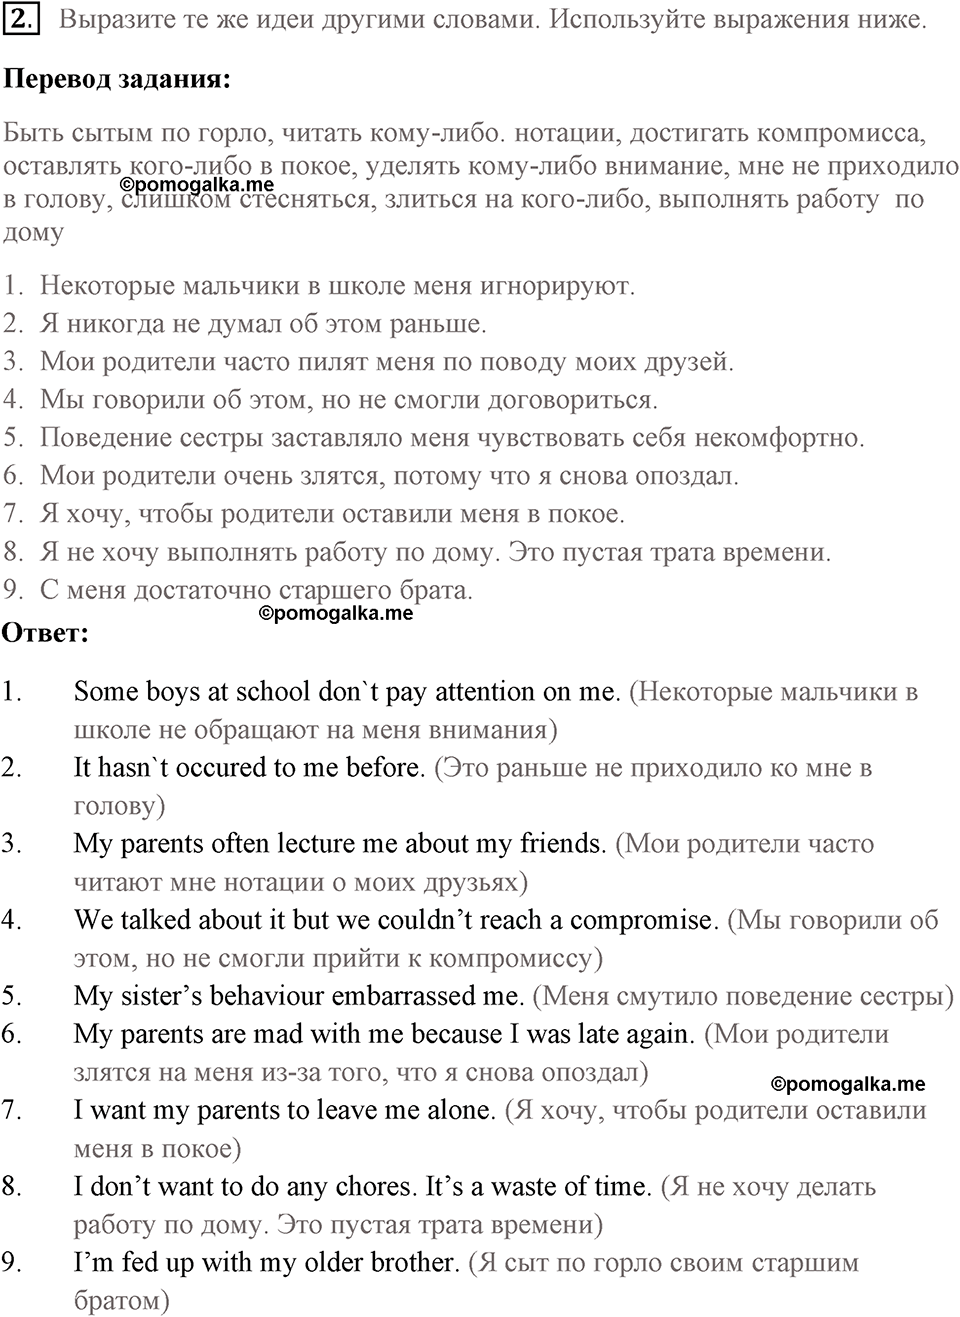 Unit 4 lesson 5-6 exercise №2 английский язык 9 класс Happy English.ru